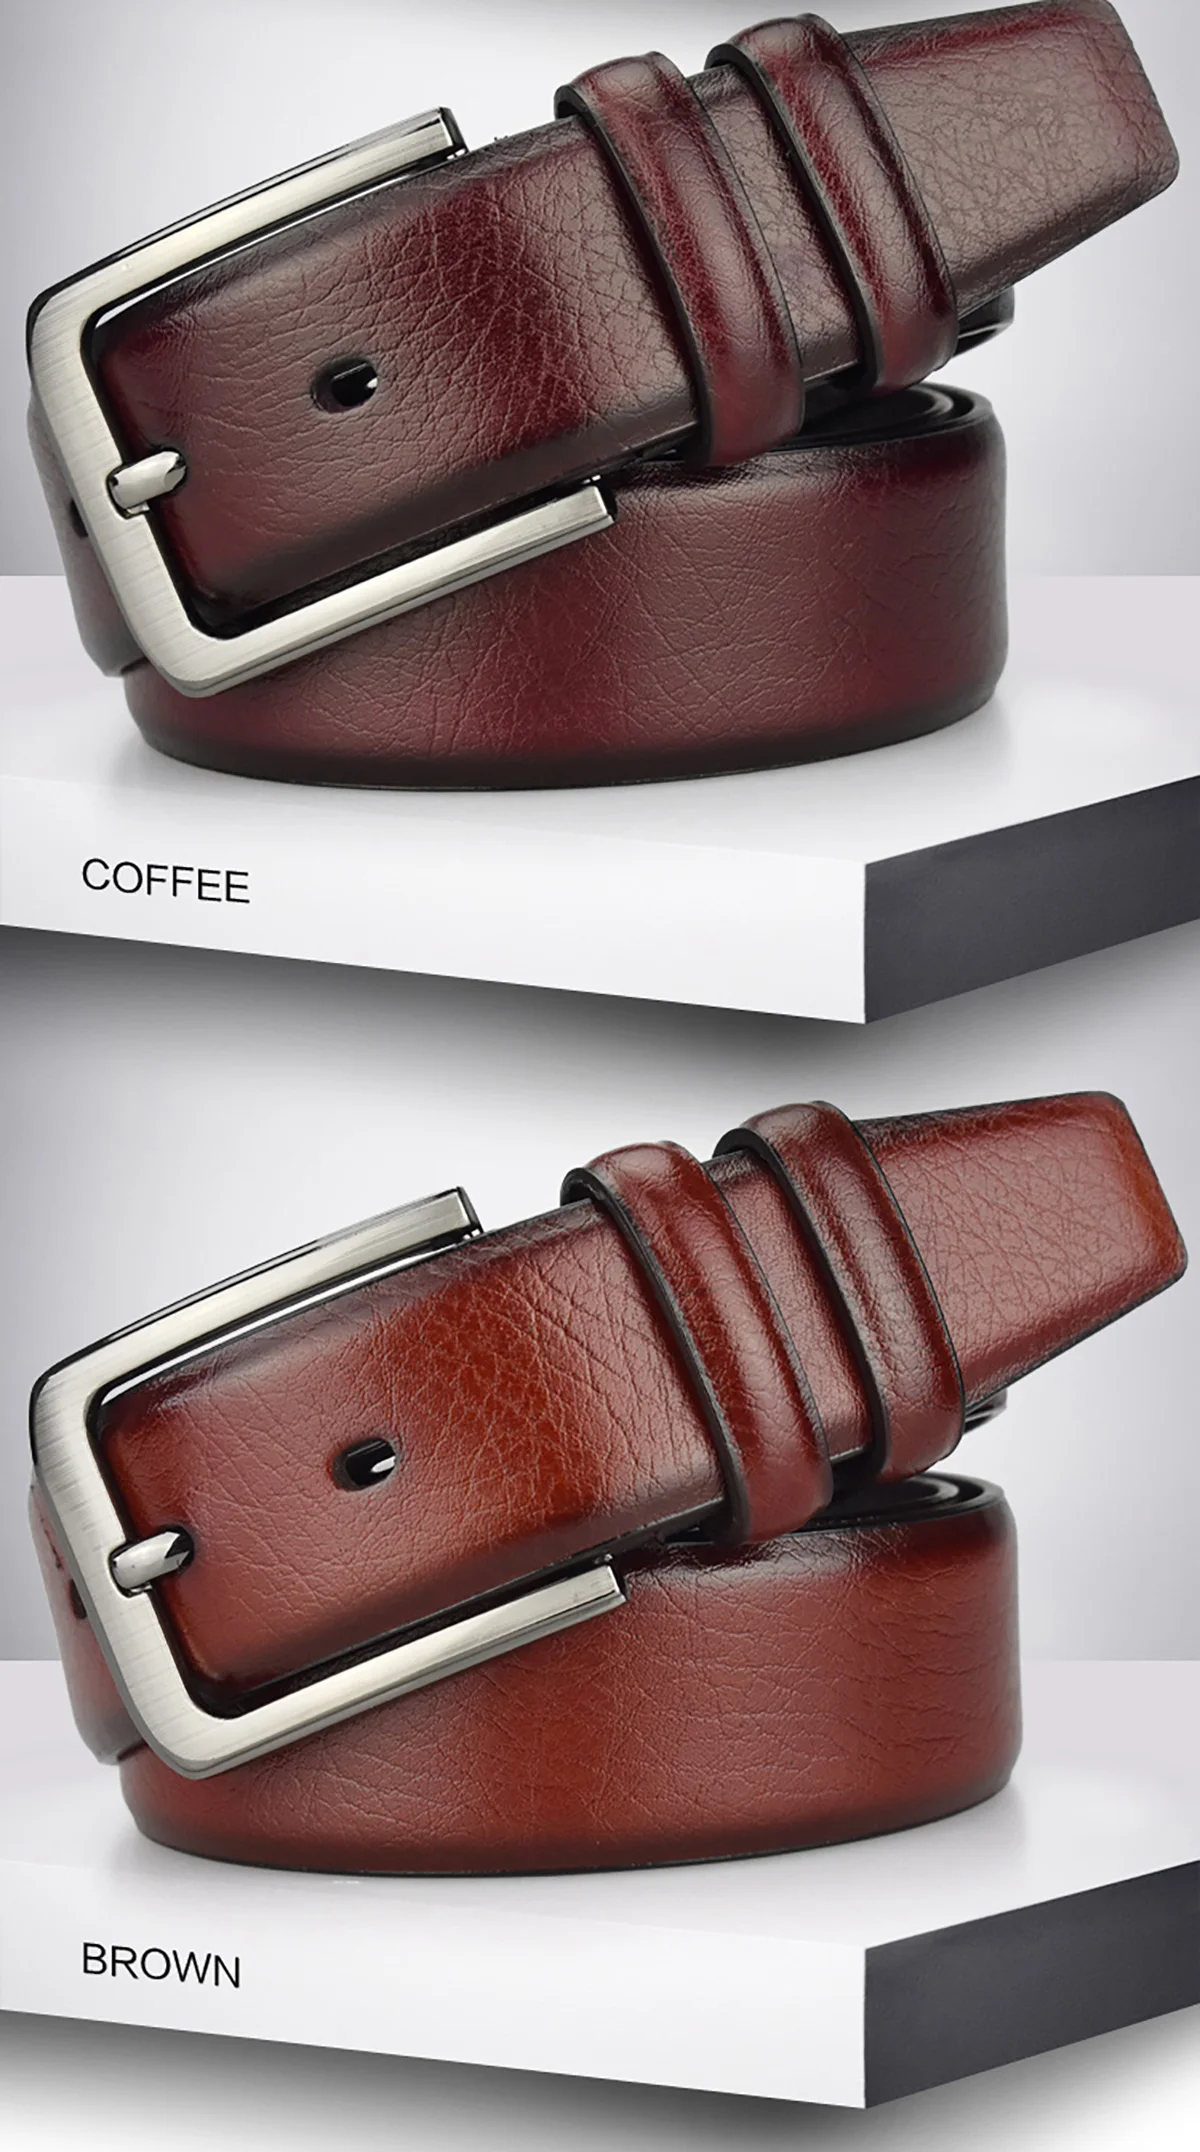 PU Leather Men Belt High Quality Luxury Strap Classic Vintage Pin Buckle Male Belt Jeans Belt for Men types of belts